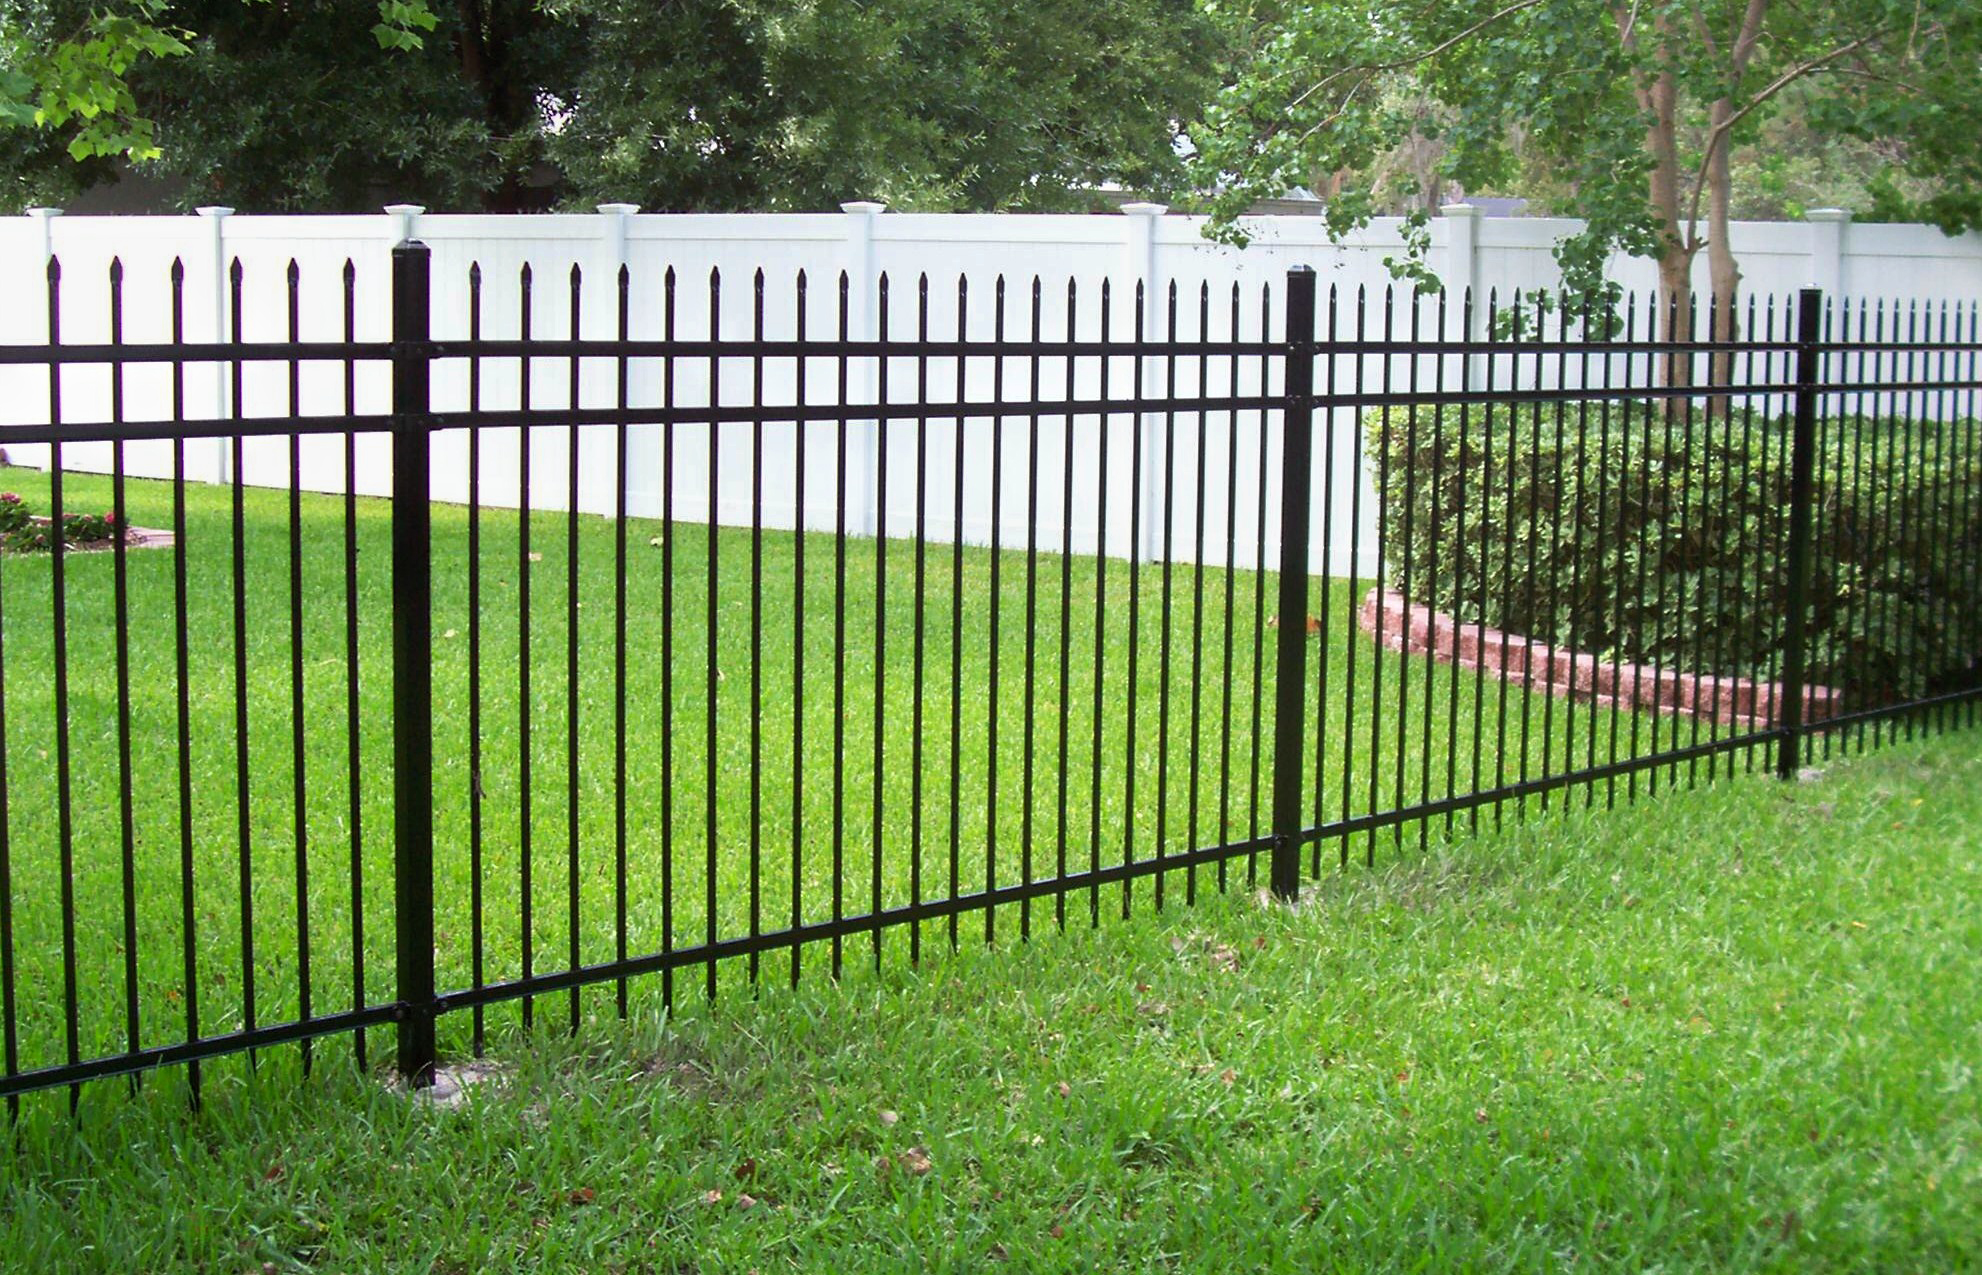 Beautiful iron gate and metal fence wrought iron zinc steel fence panels